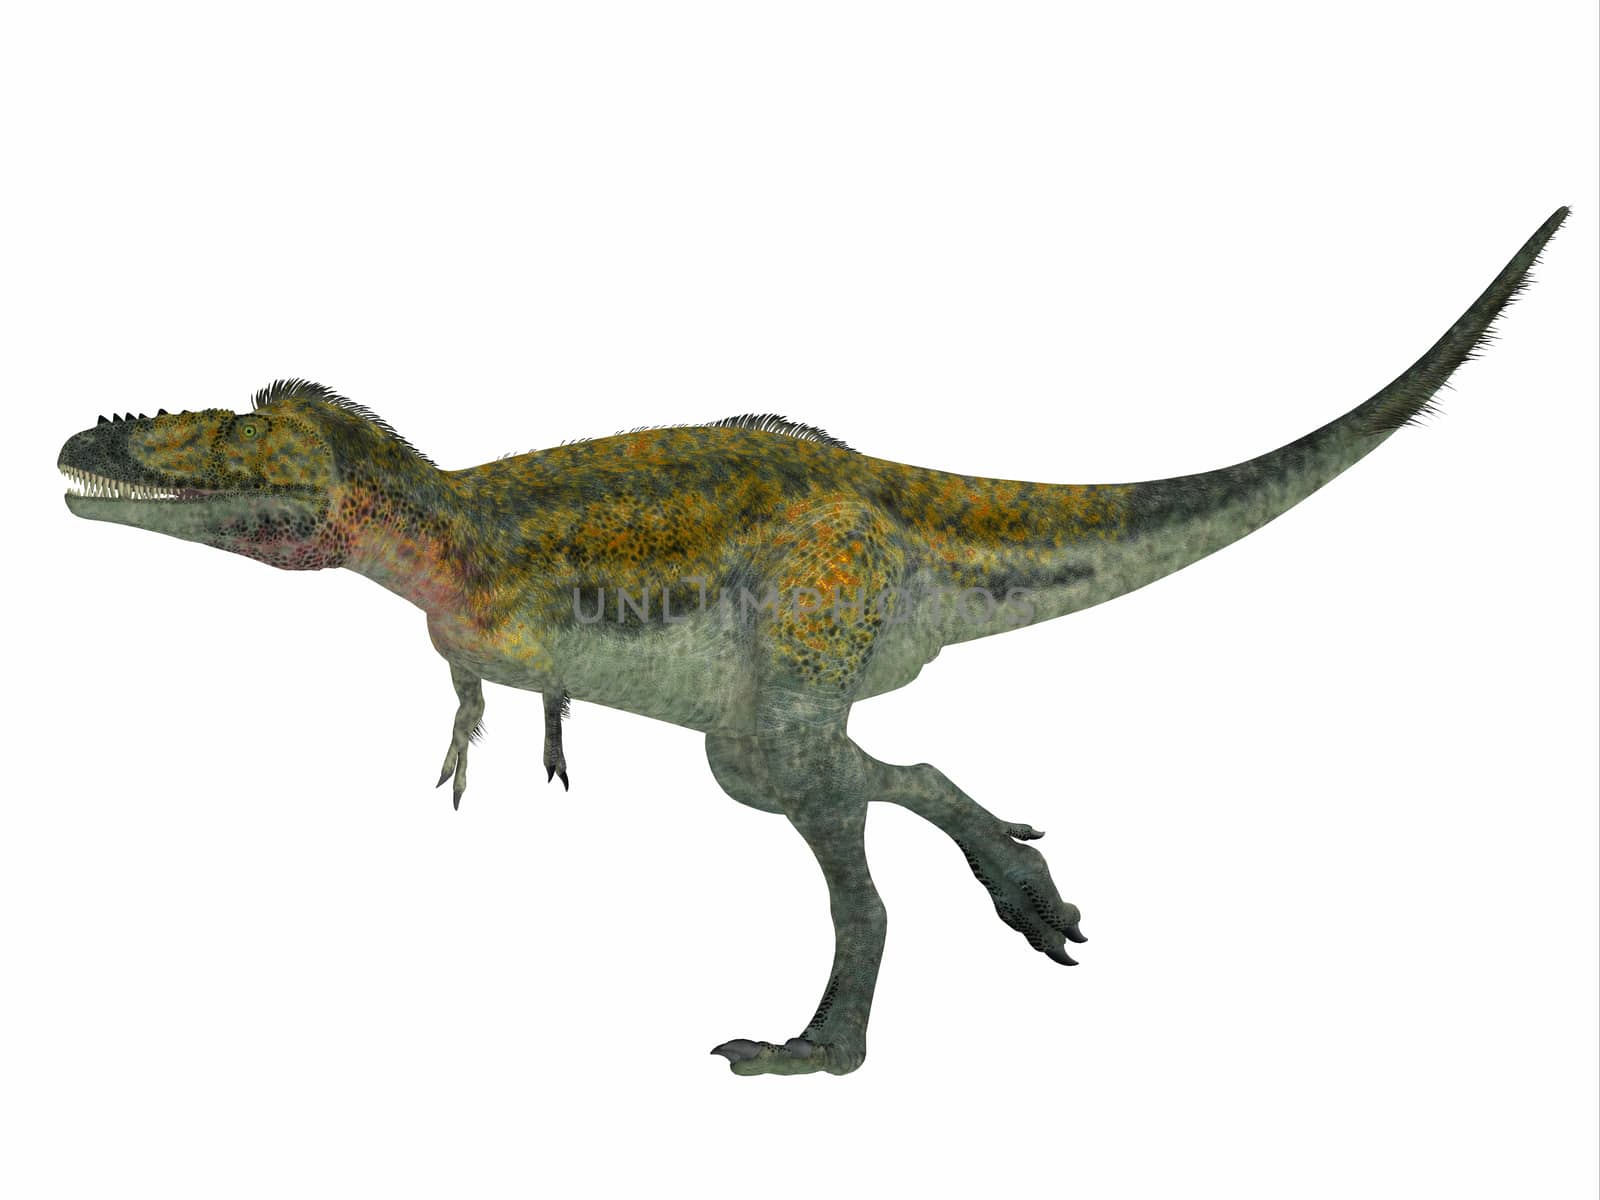 Alioramus Dinosaur Side Profile by Catmando